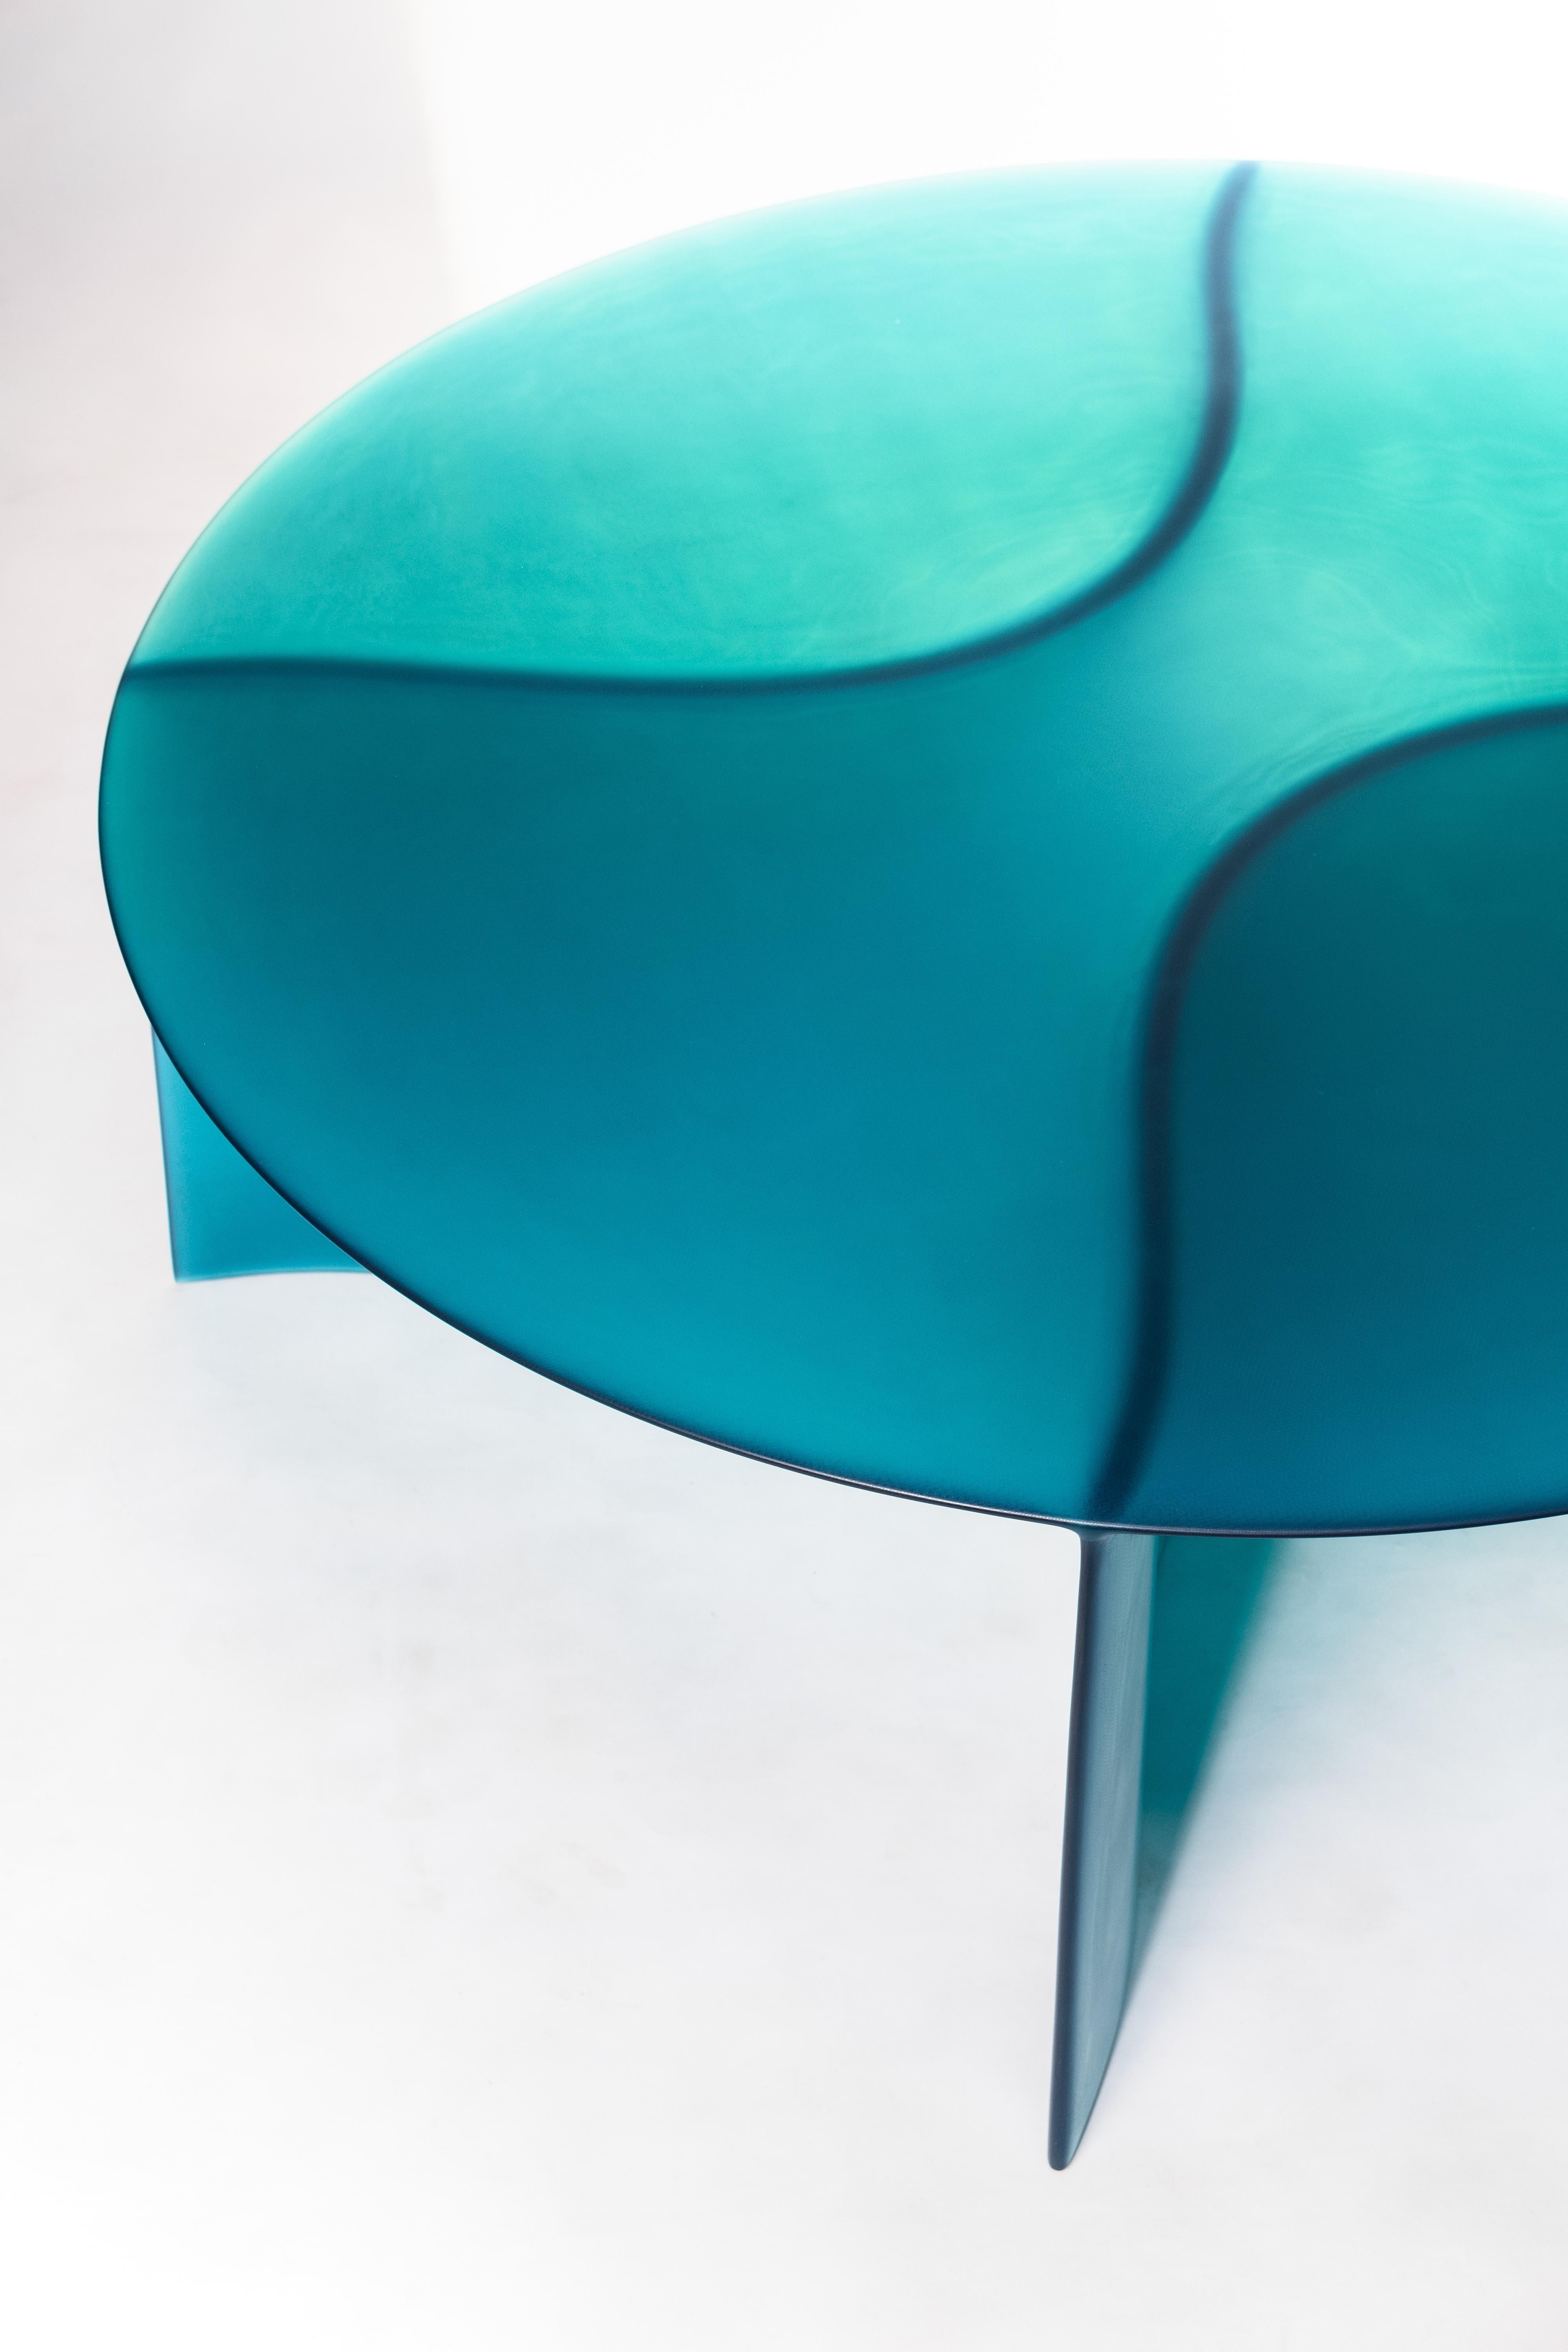 XXIe siècle et contemporain Contemporary Blue Fiberglass, New Wave Coffee Table Round 120cm, by Lukas Cober